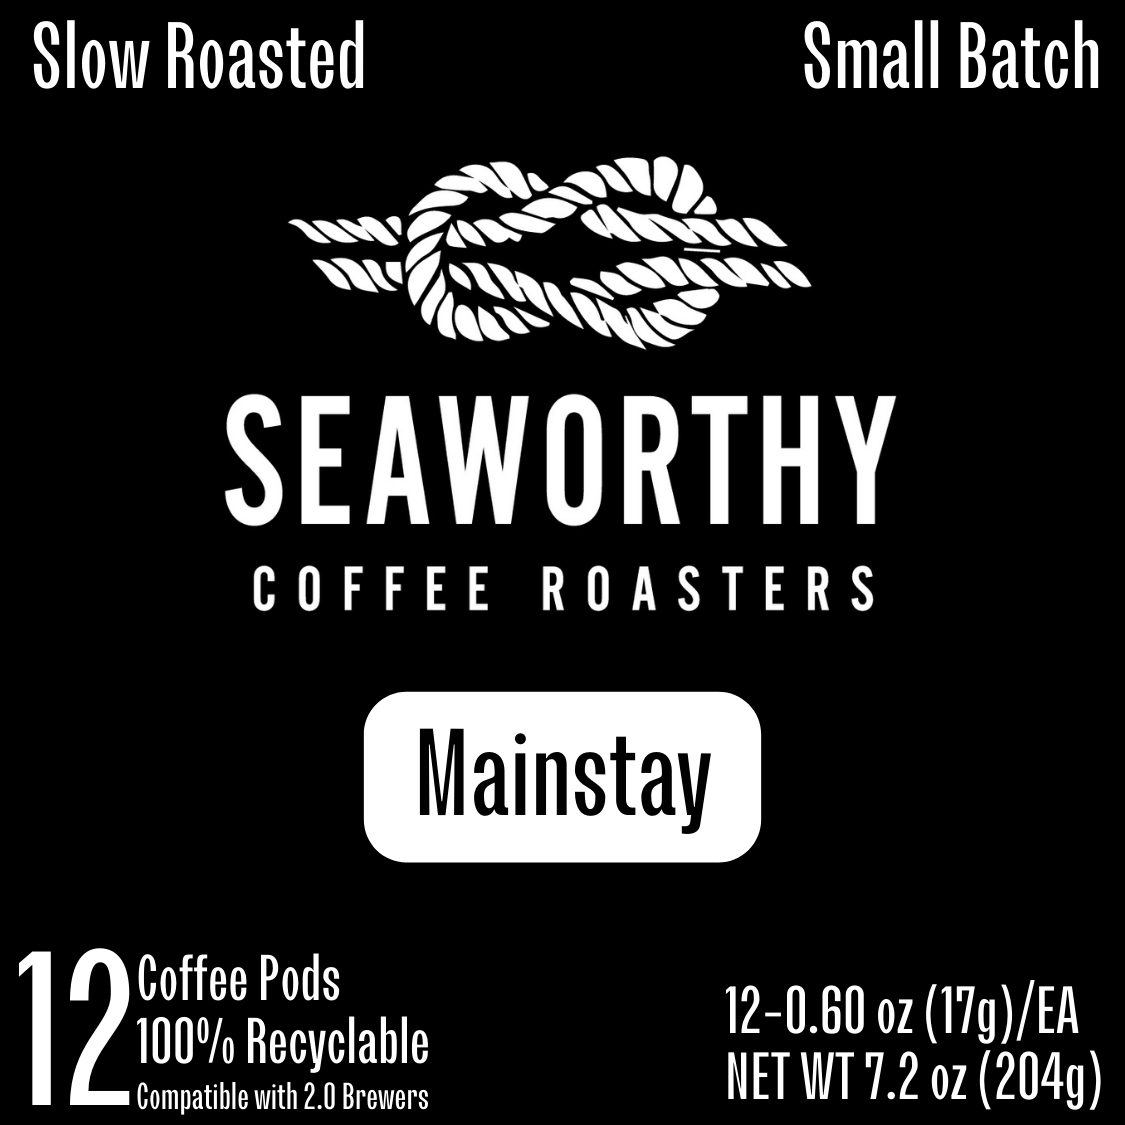 Seaworthy Mainstay Coffee Pods.  Slow Roasted.  Small Batch.  Dark roast coffee pods.  Recyclable coffee pods.  